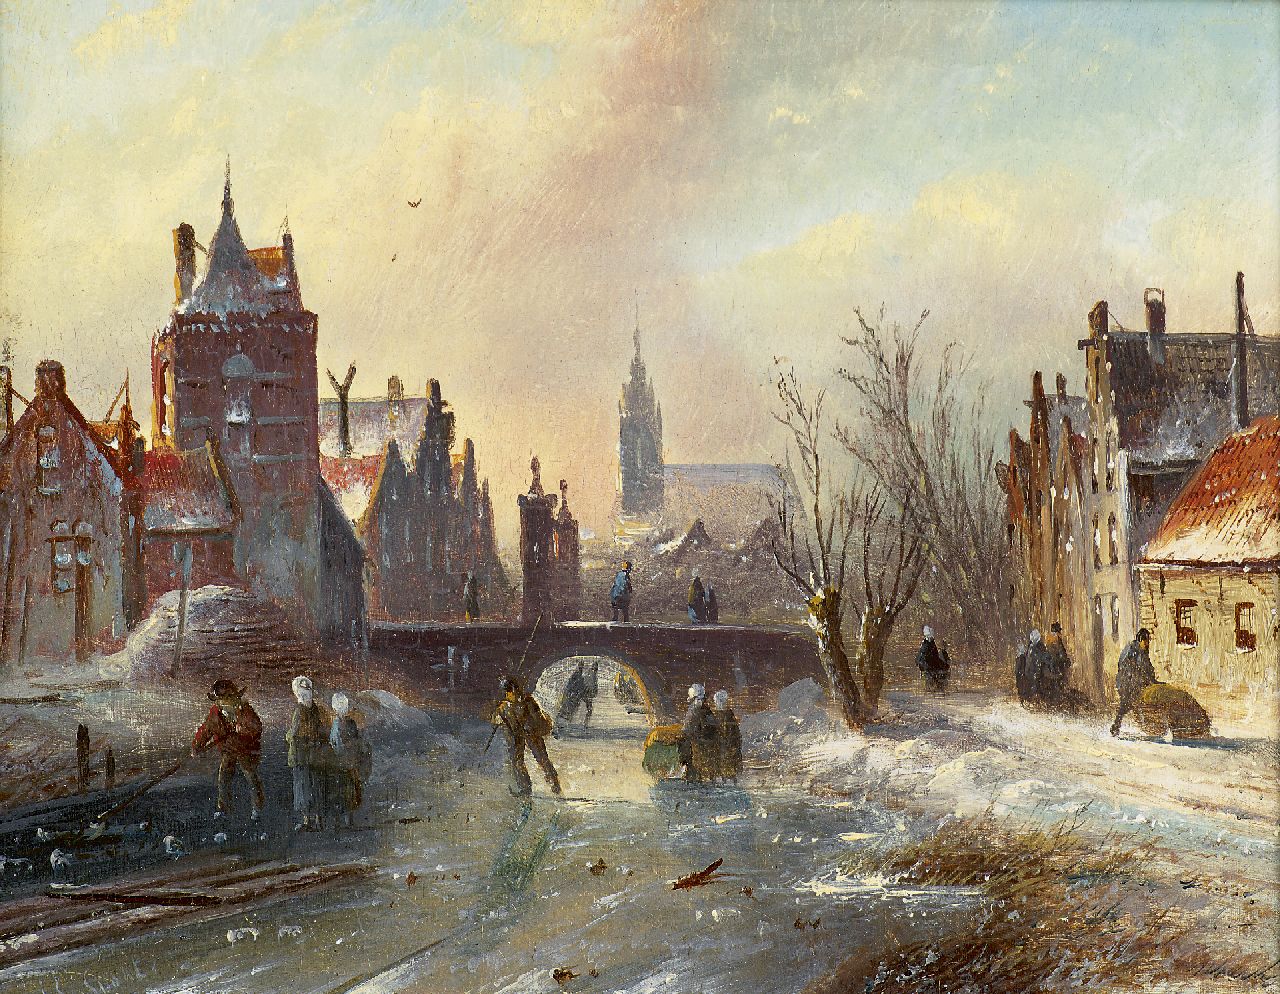 Spohler J.J.C.  | Jacob Jan Coenraad Spohler, Skaters on a canal in winter, oil on panel 16.0 x 21.0 cm, signed l.r.